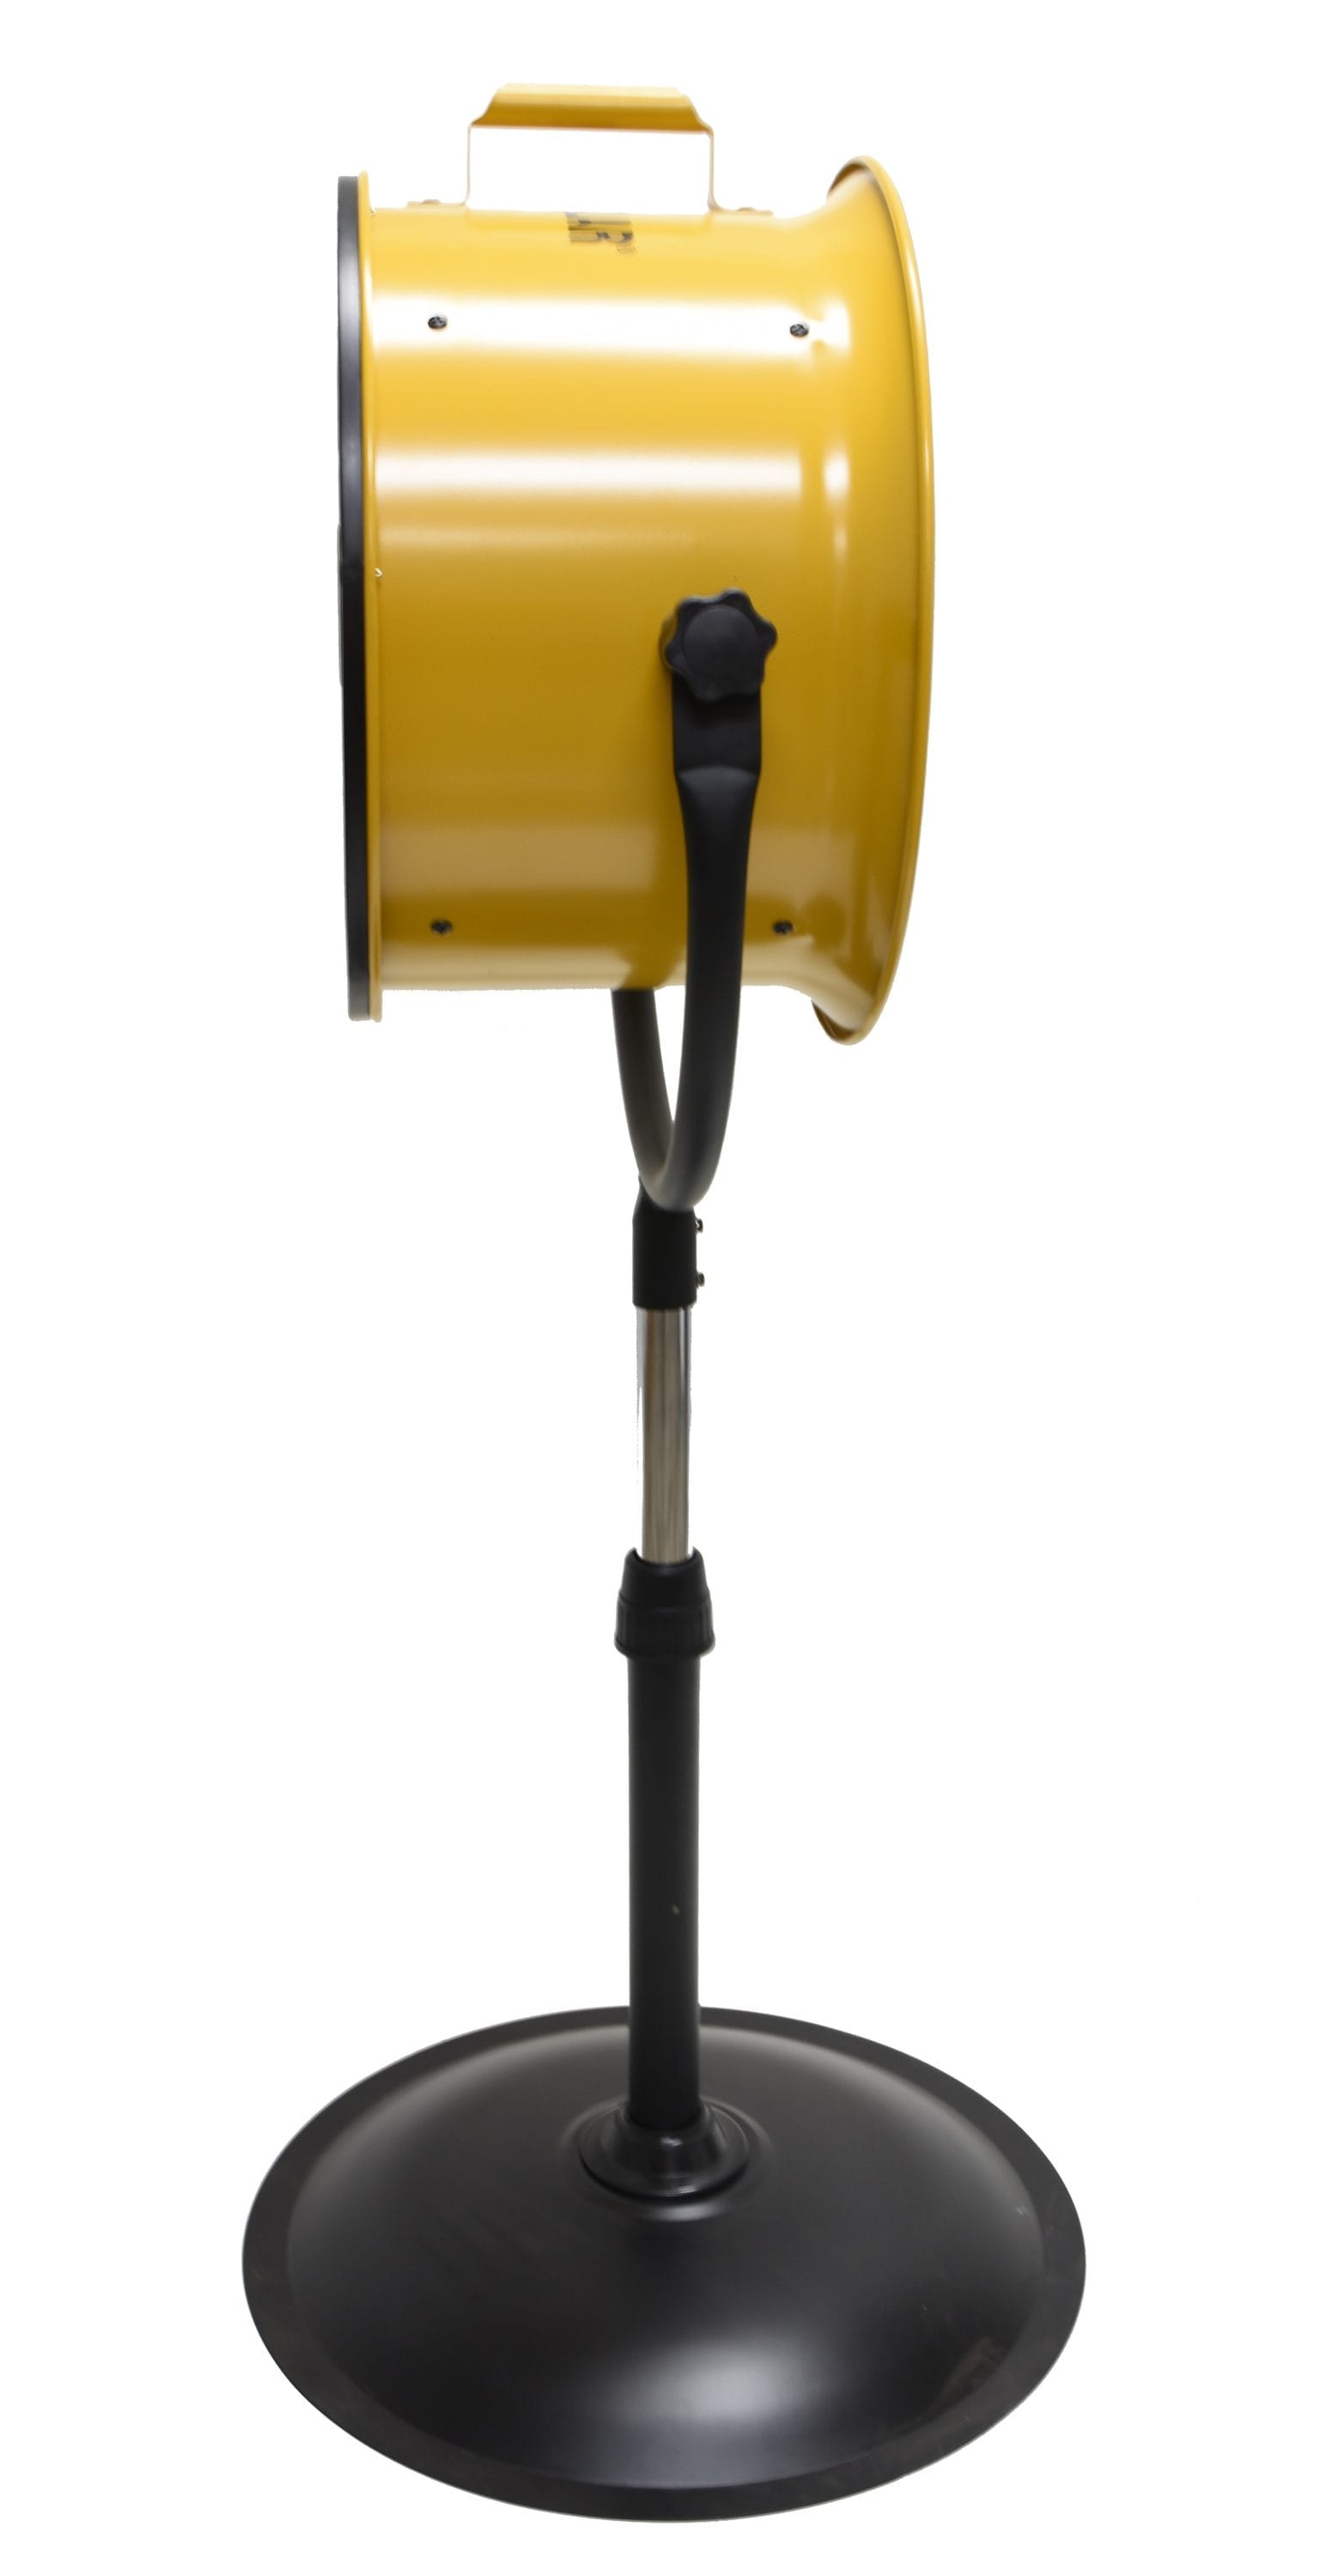 Cat 14-in 4-Speed Indoor Yellow Pedestal Fan in the Portable Fans 